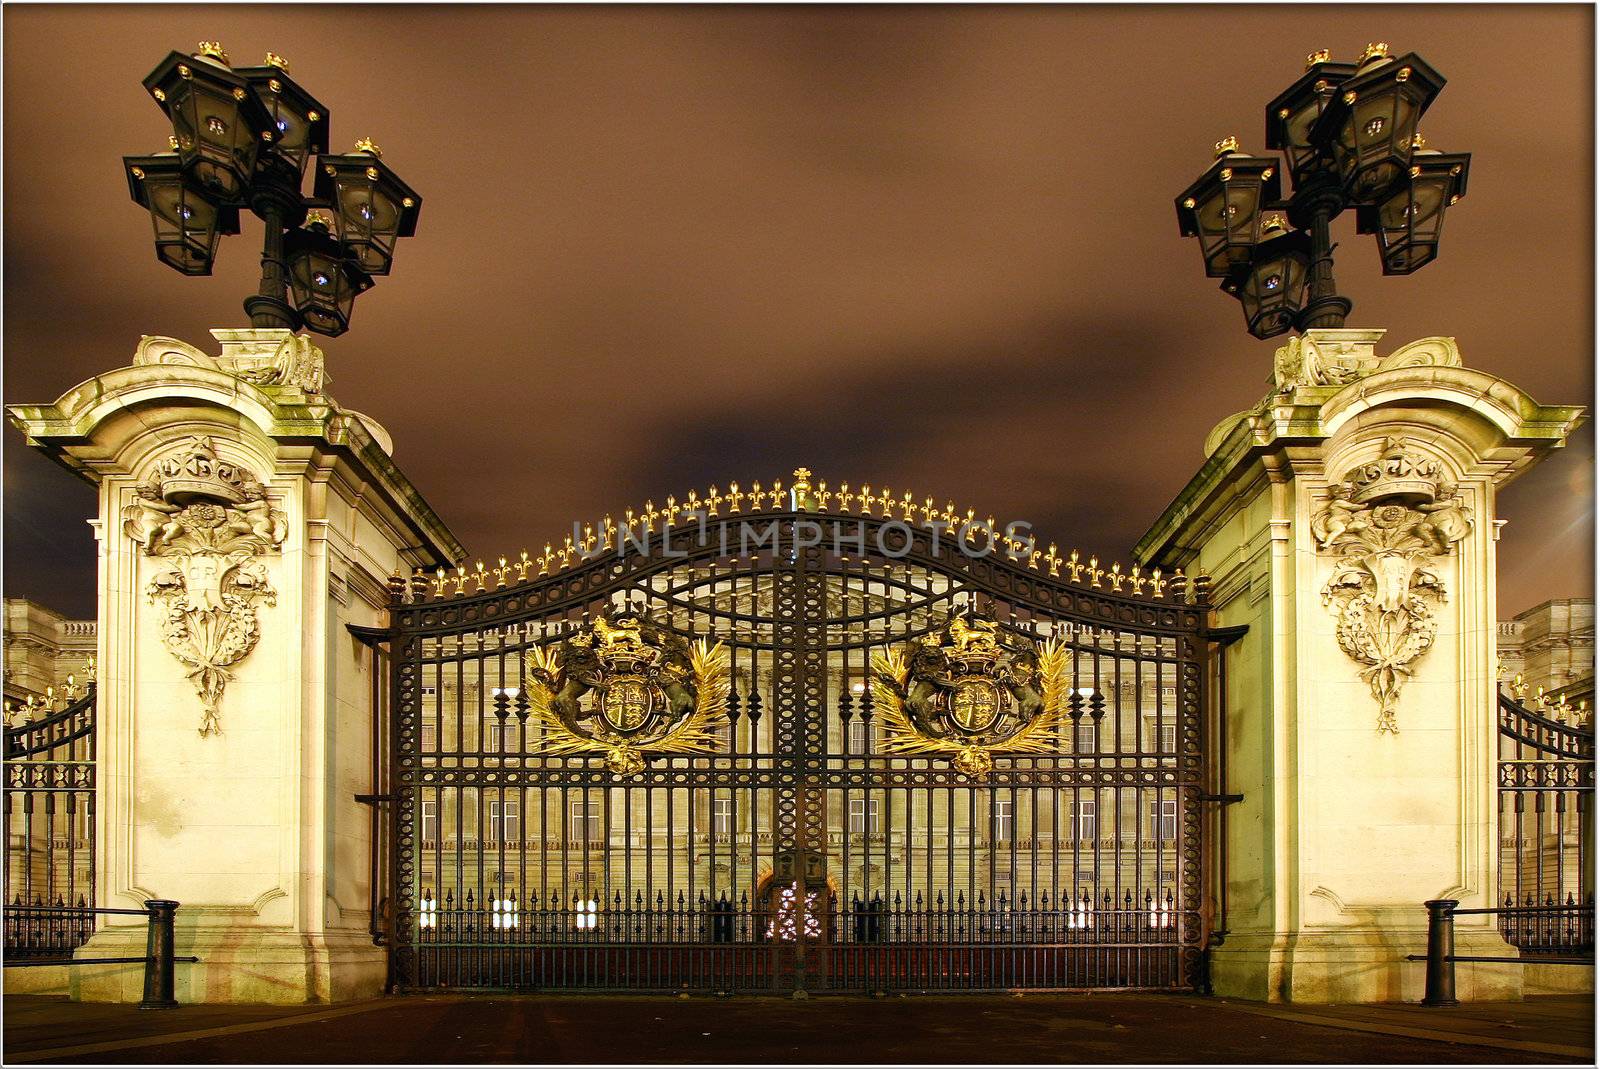 Buckingham Palace by Imagecom